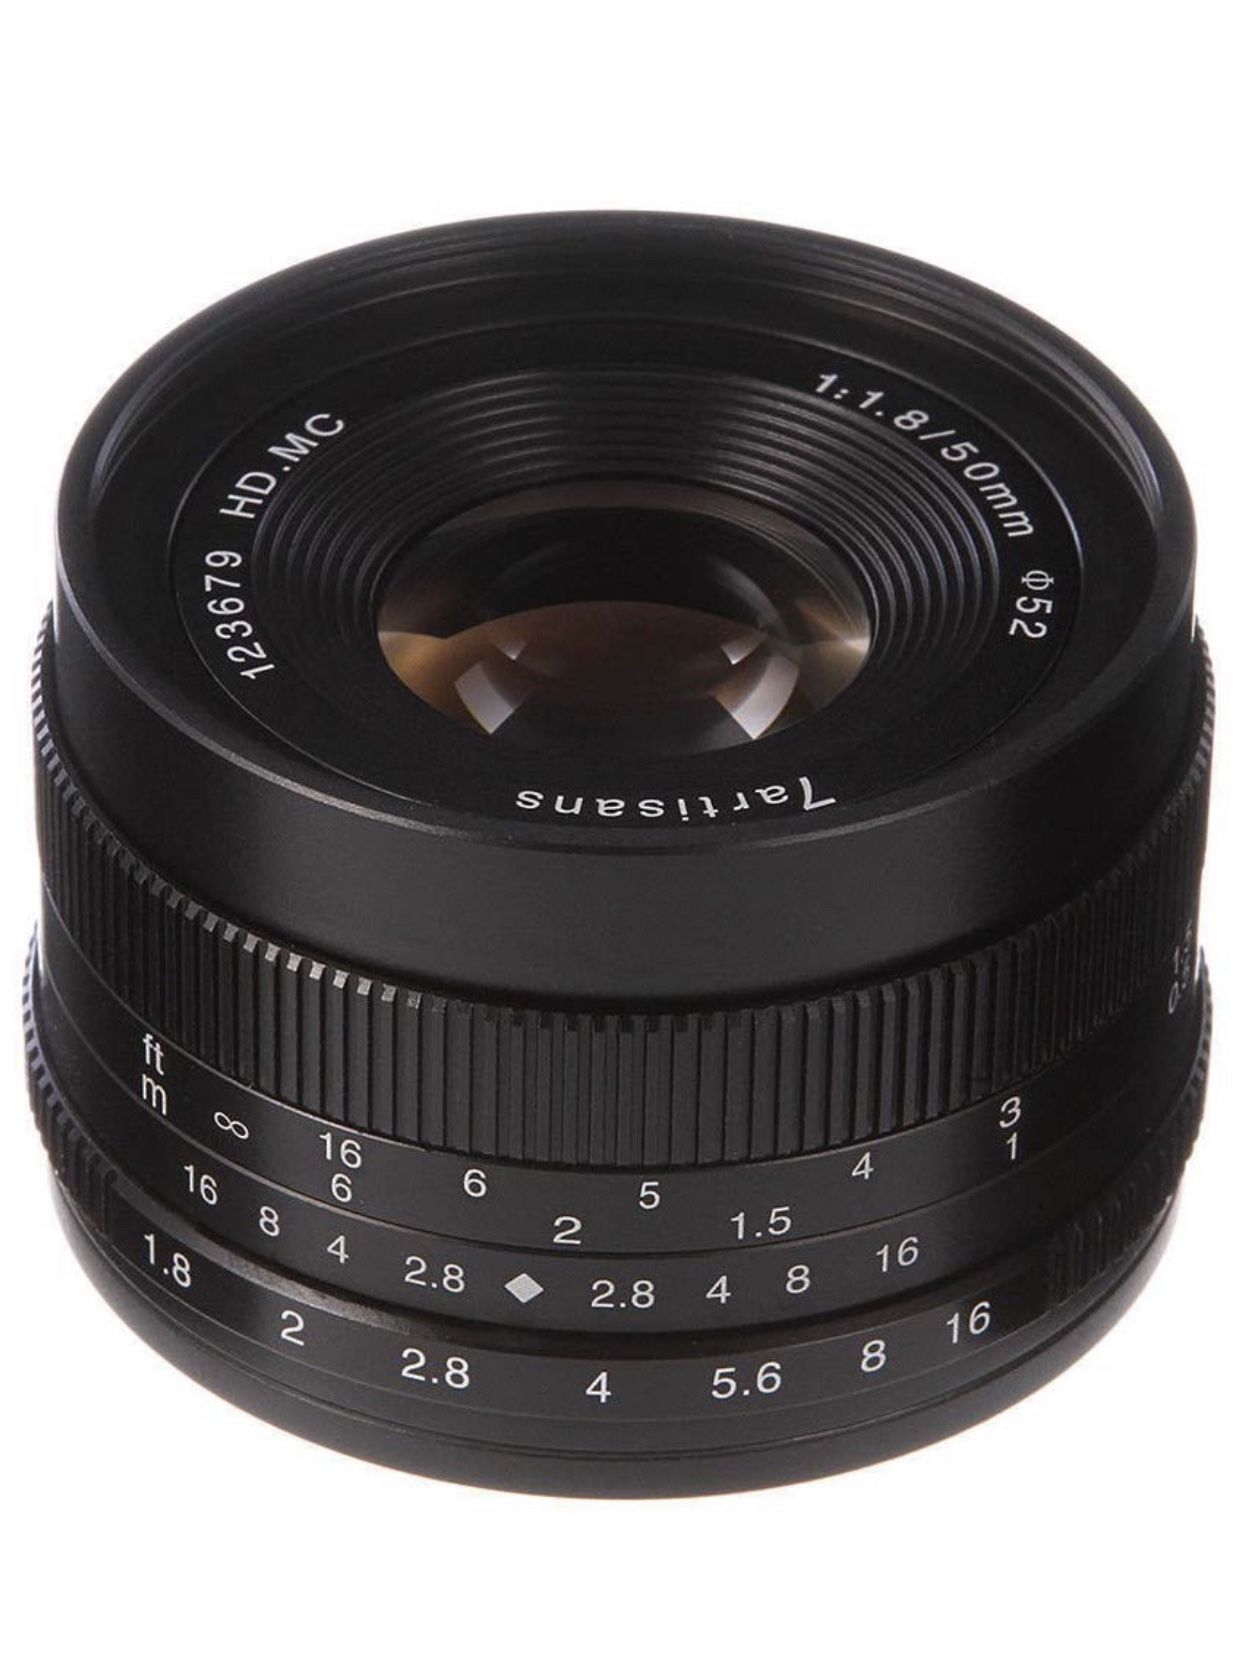 7artisans 50mm F1.8 Emount manual lens